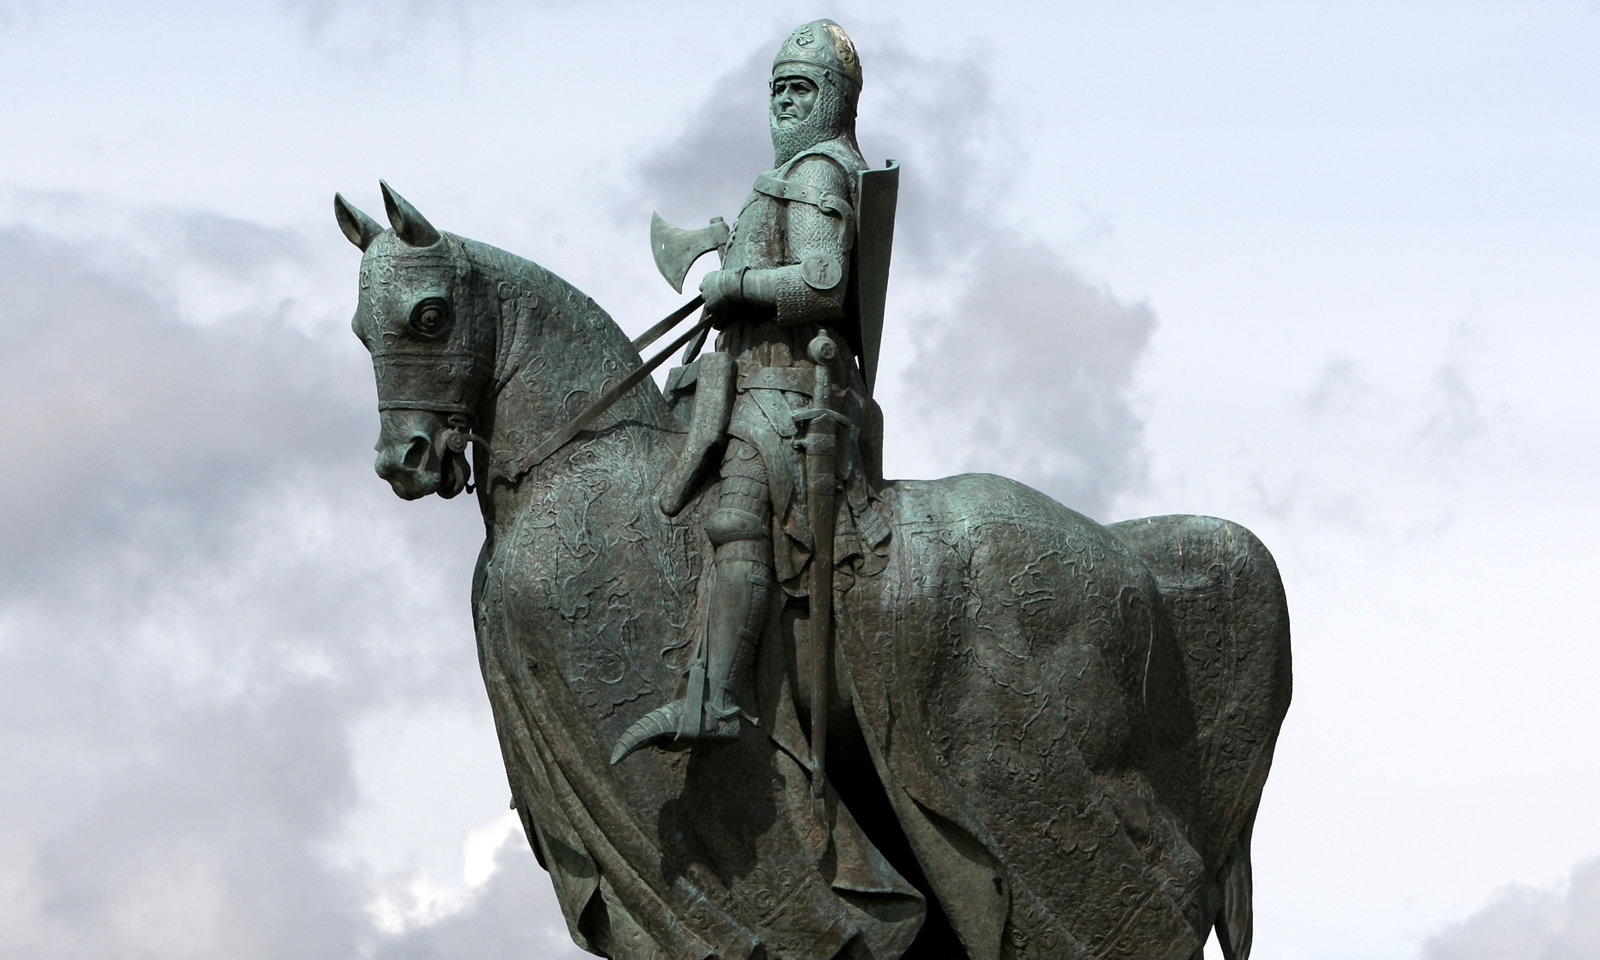 Robert the Bruce Statue at the Battle of Bannockburn site